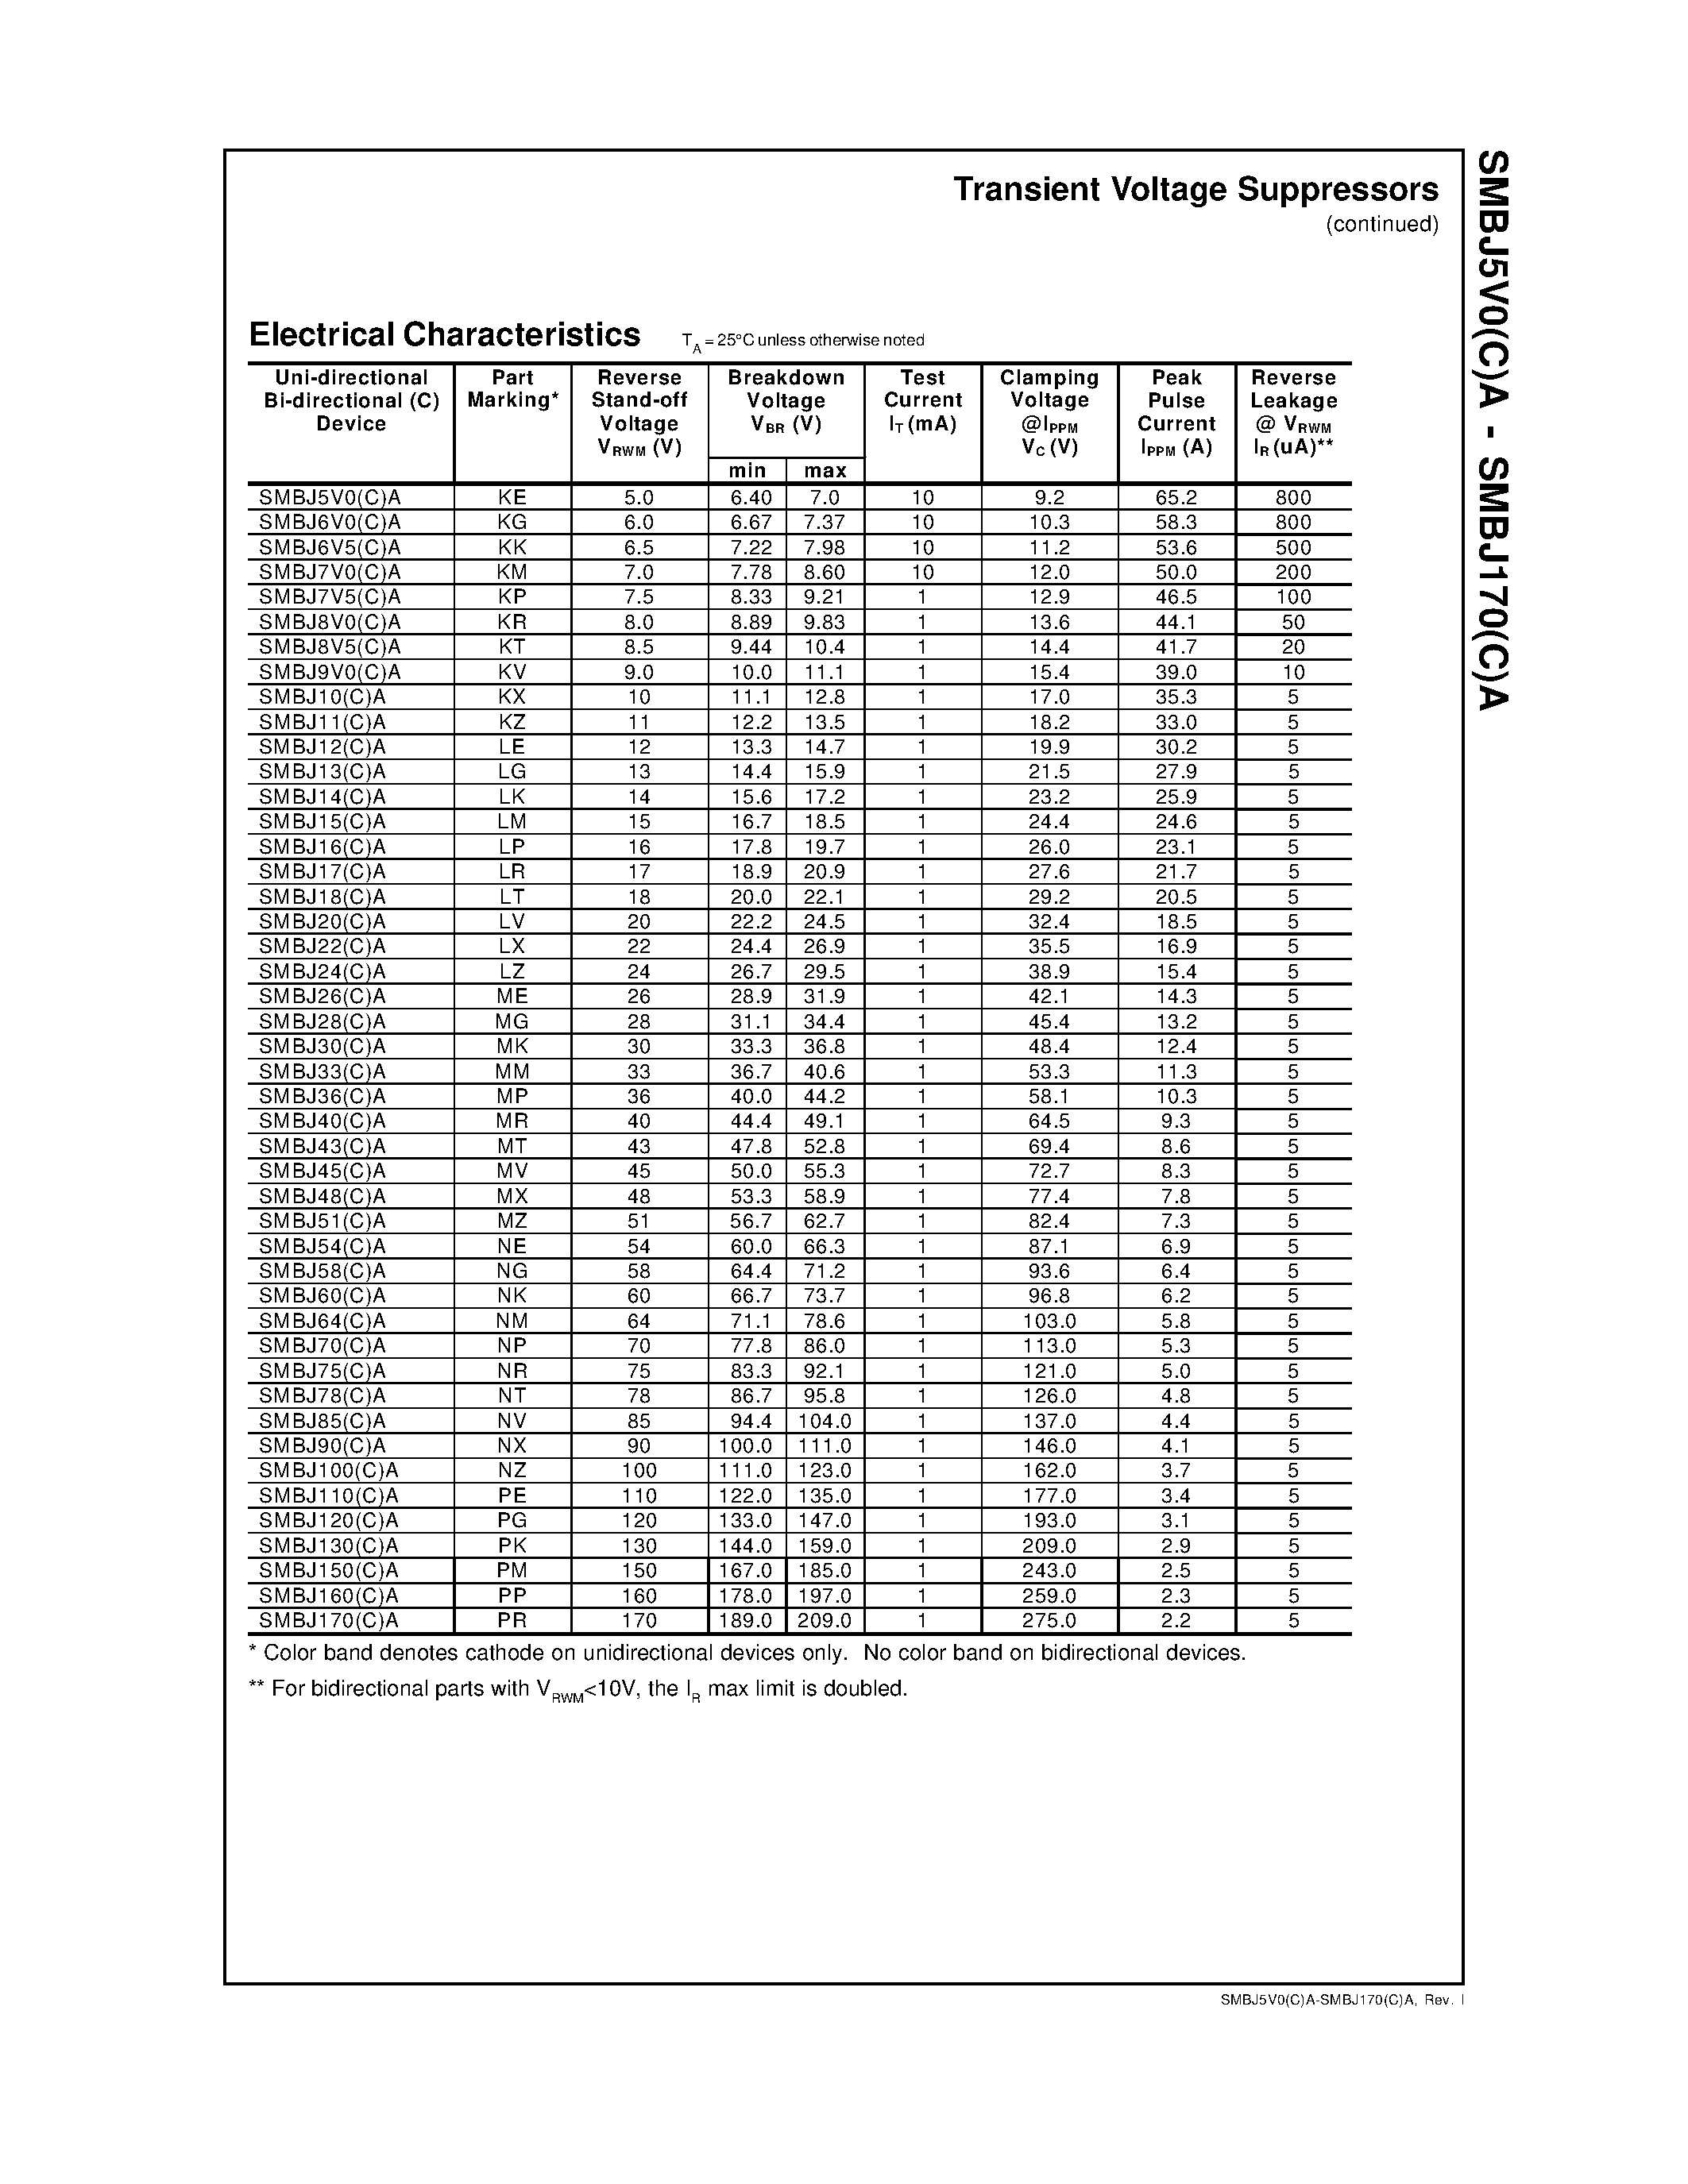 Datasheet SMBJ12A - Transient Voltage Suppressors SMBJ5V0(C)A - SMBJ170(C)A page 2